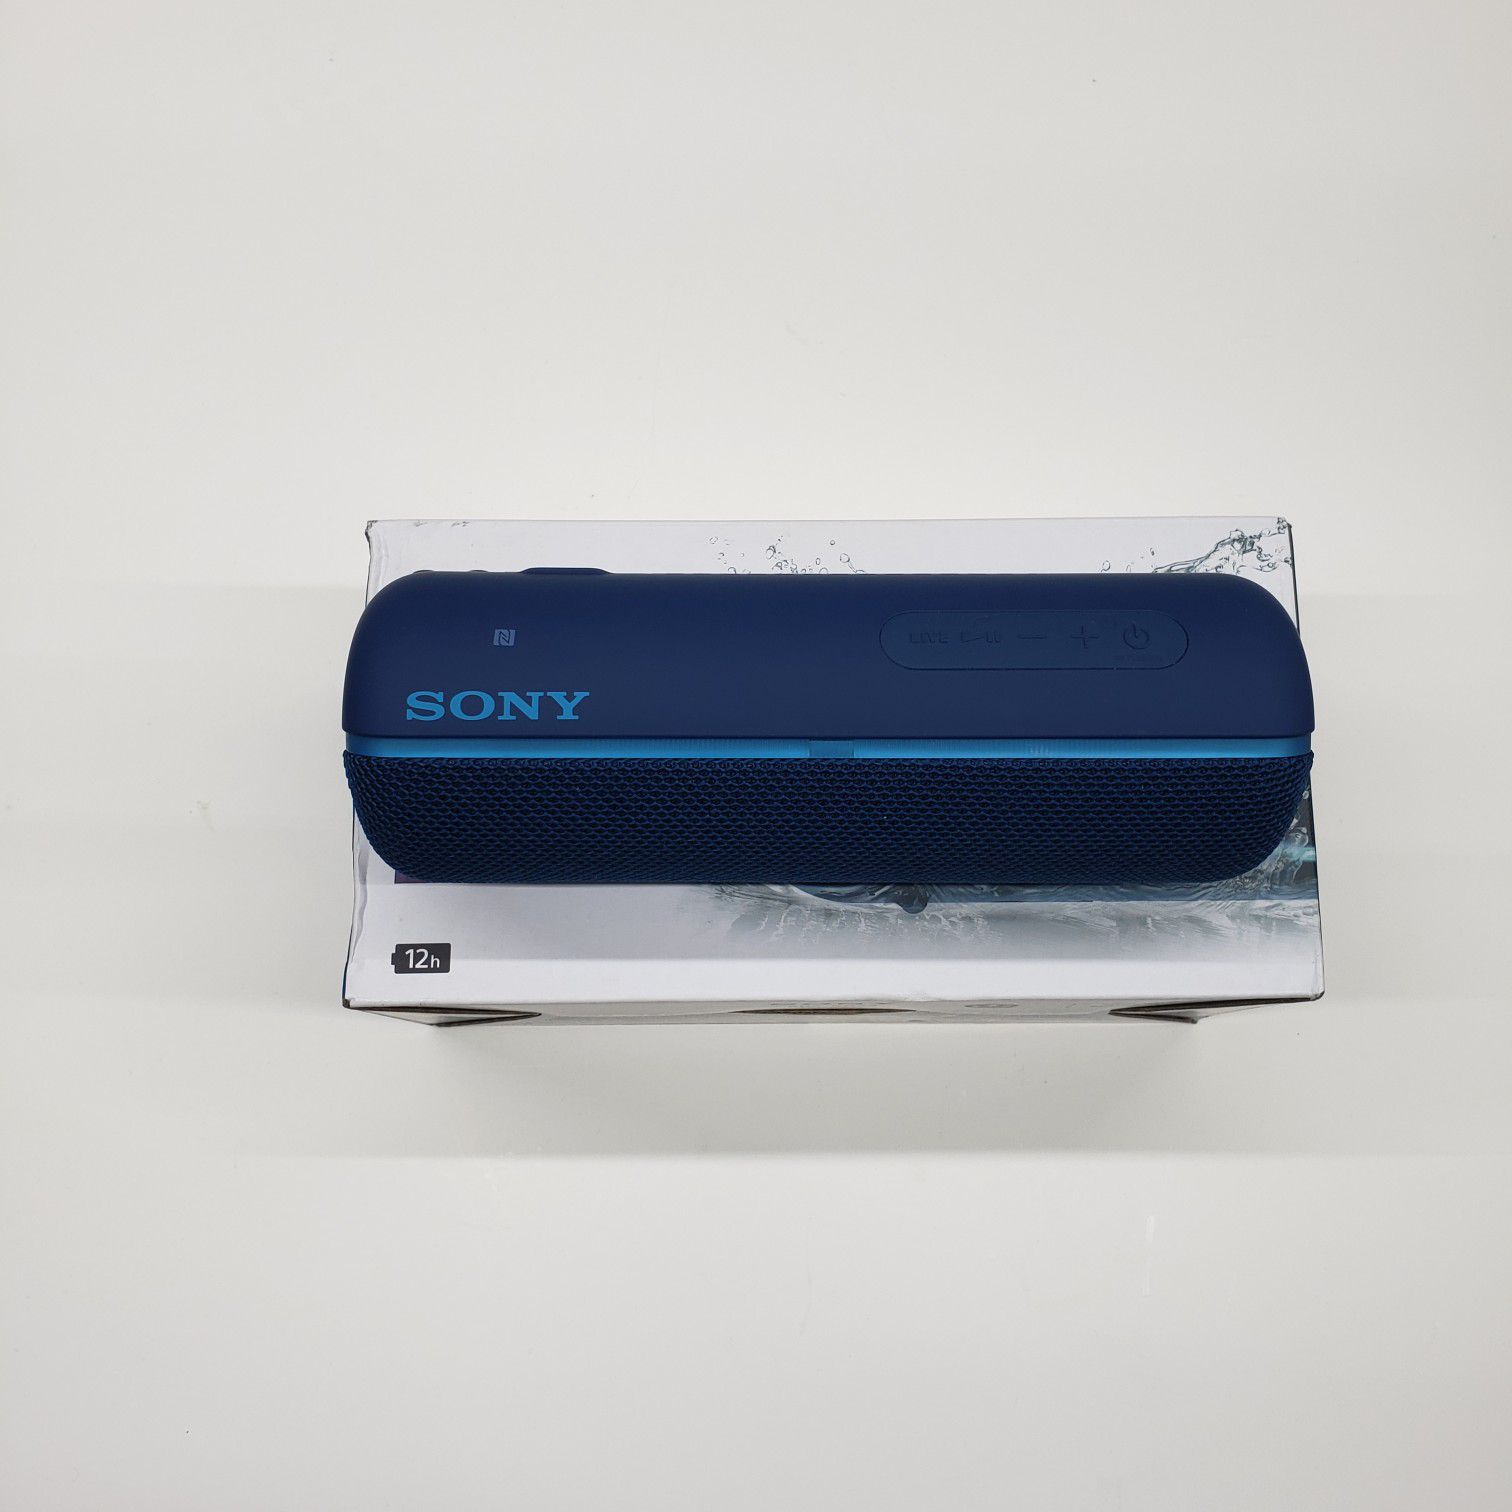 Sony XB22 Extra Bass Portable Wireless Bluetoot Speaker - SRS-XB22 - Blue